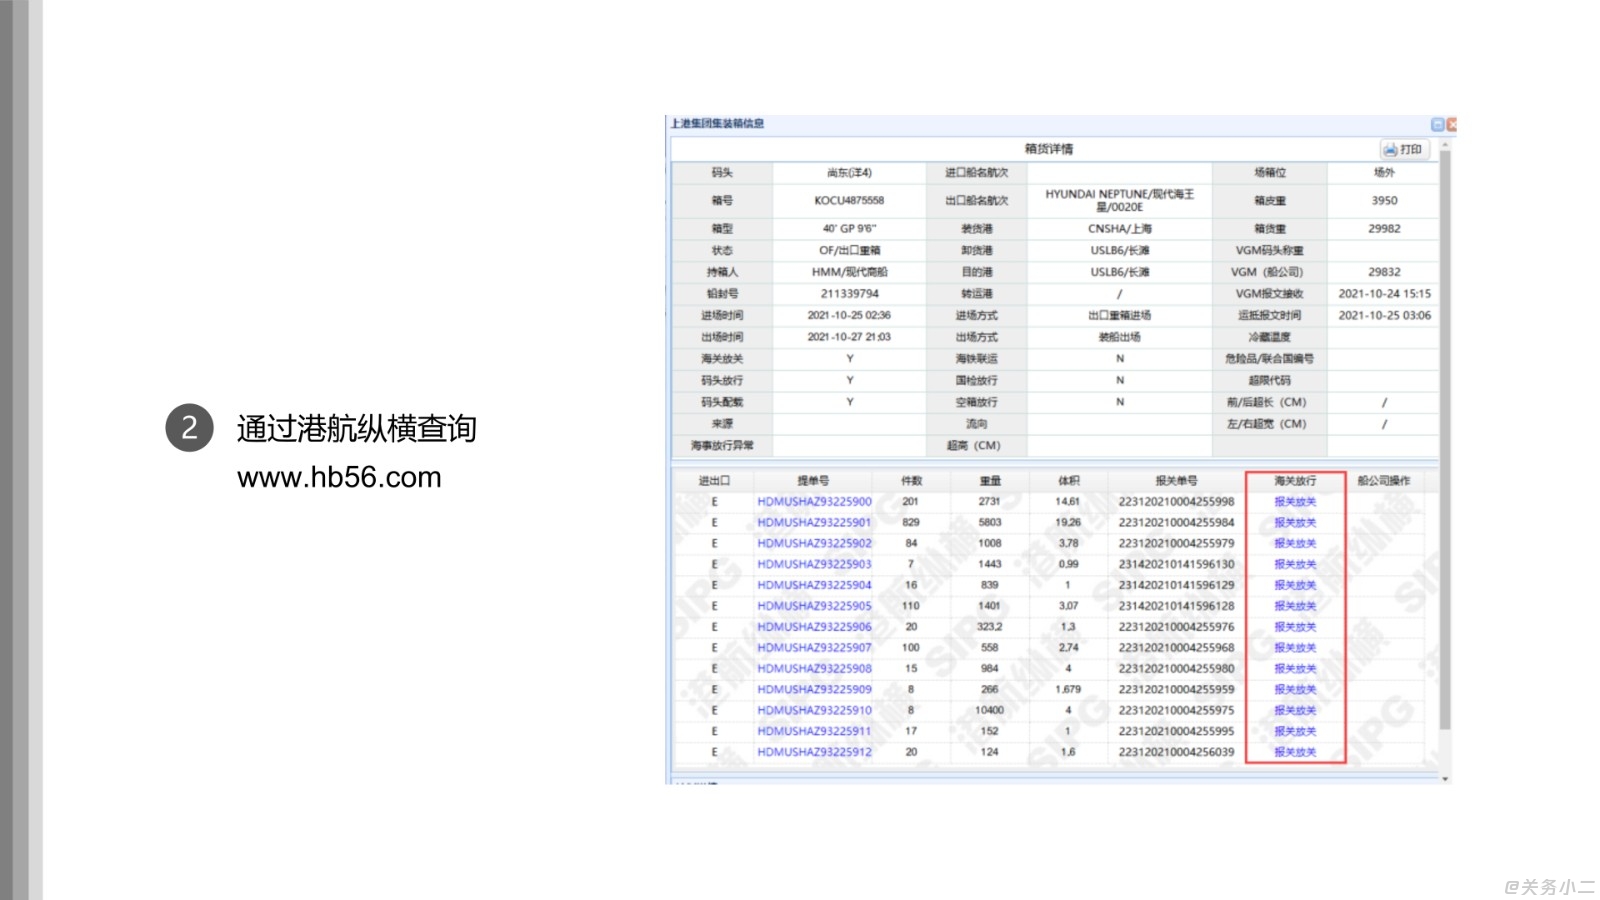 PPT-上海海关海运出口放行信息切换安排宣贯会_9.jpg